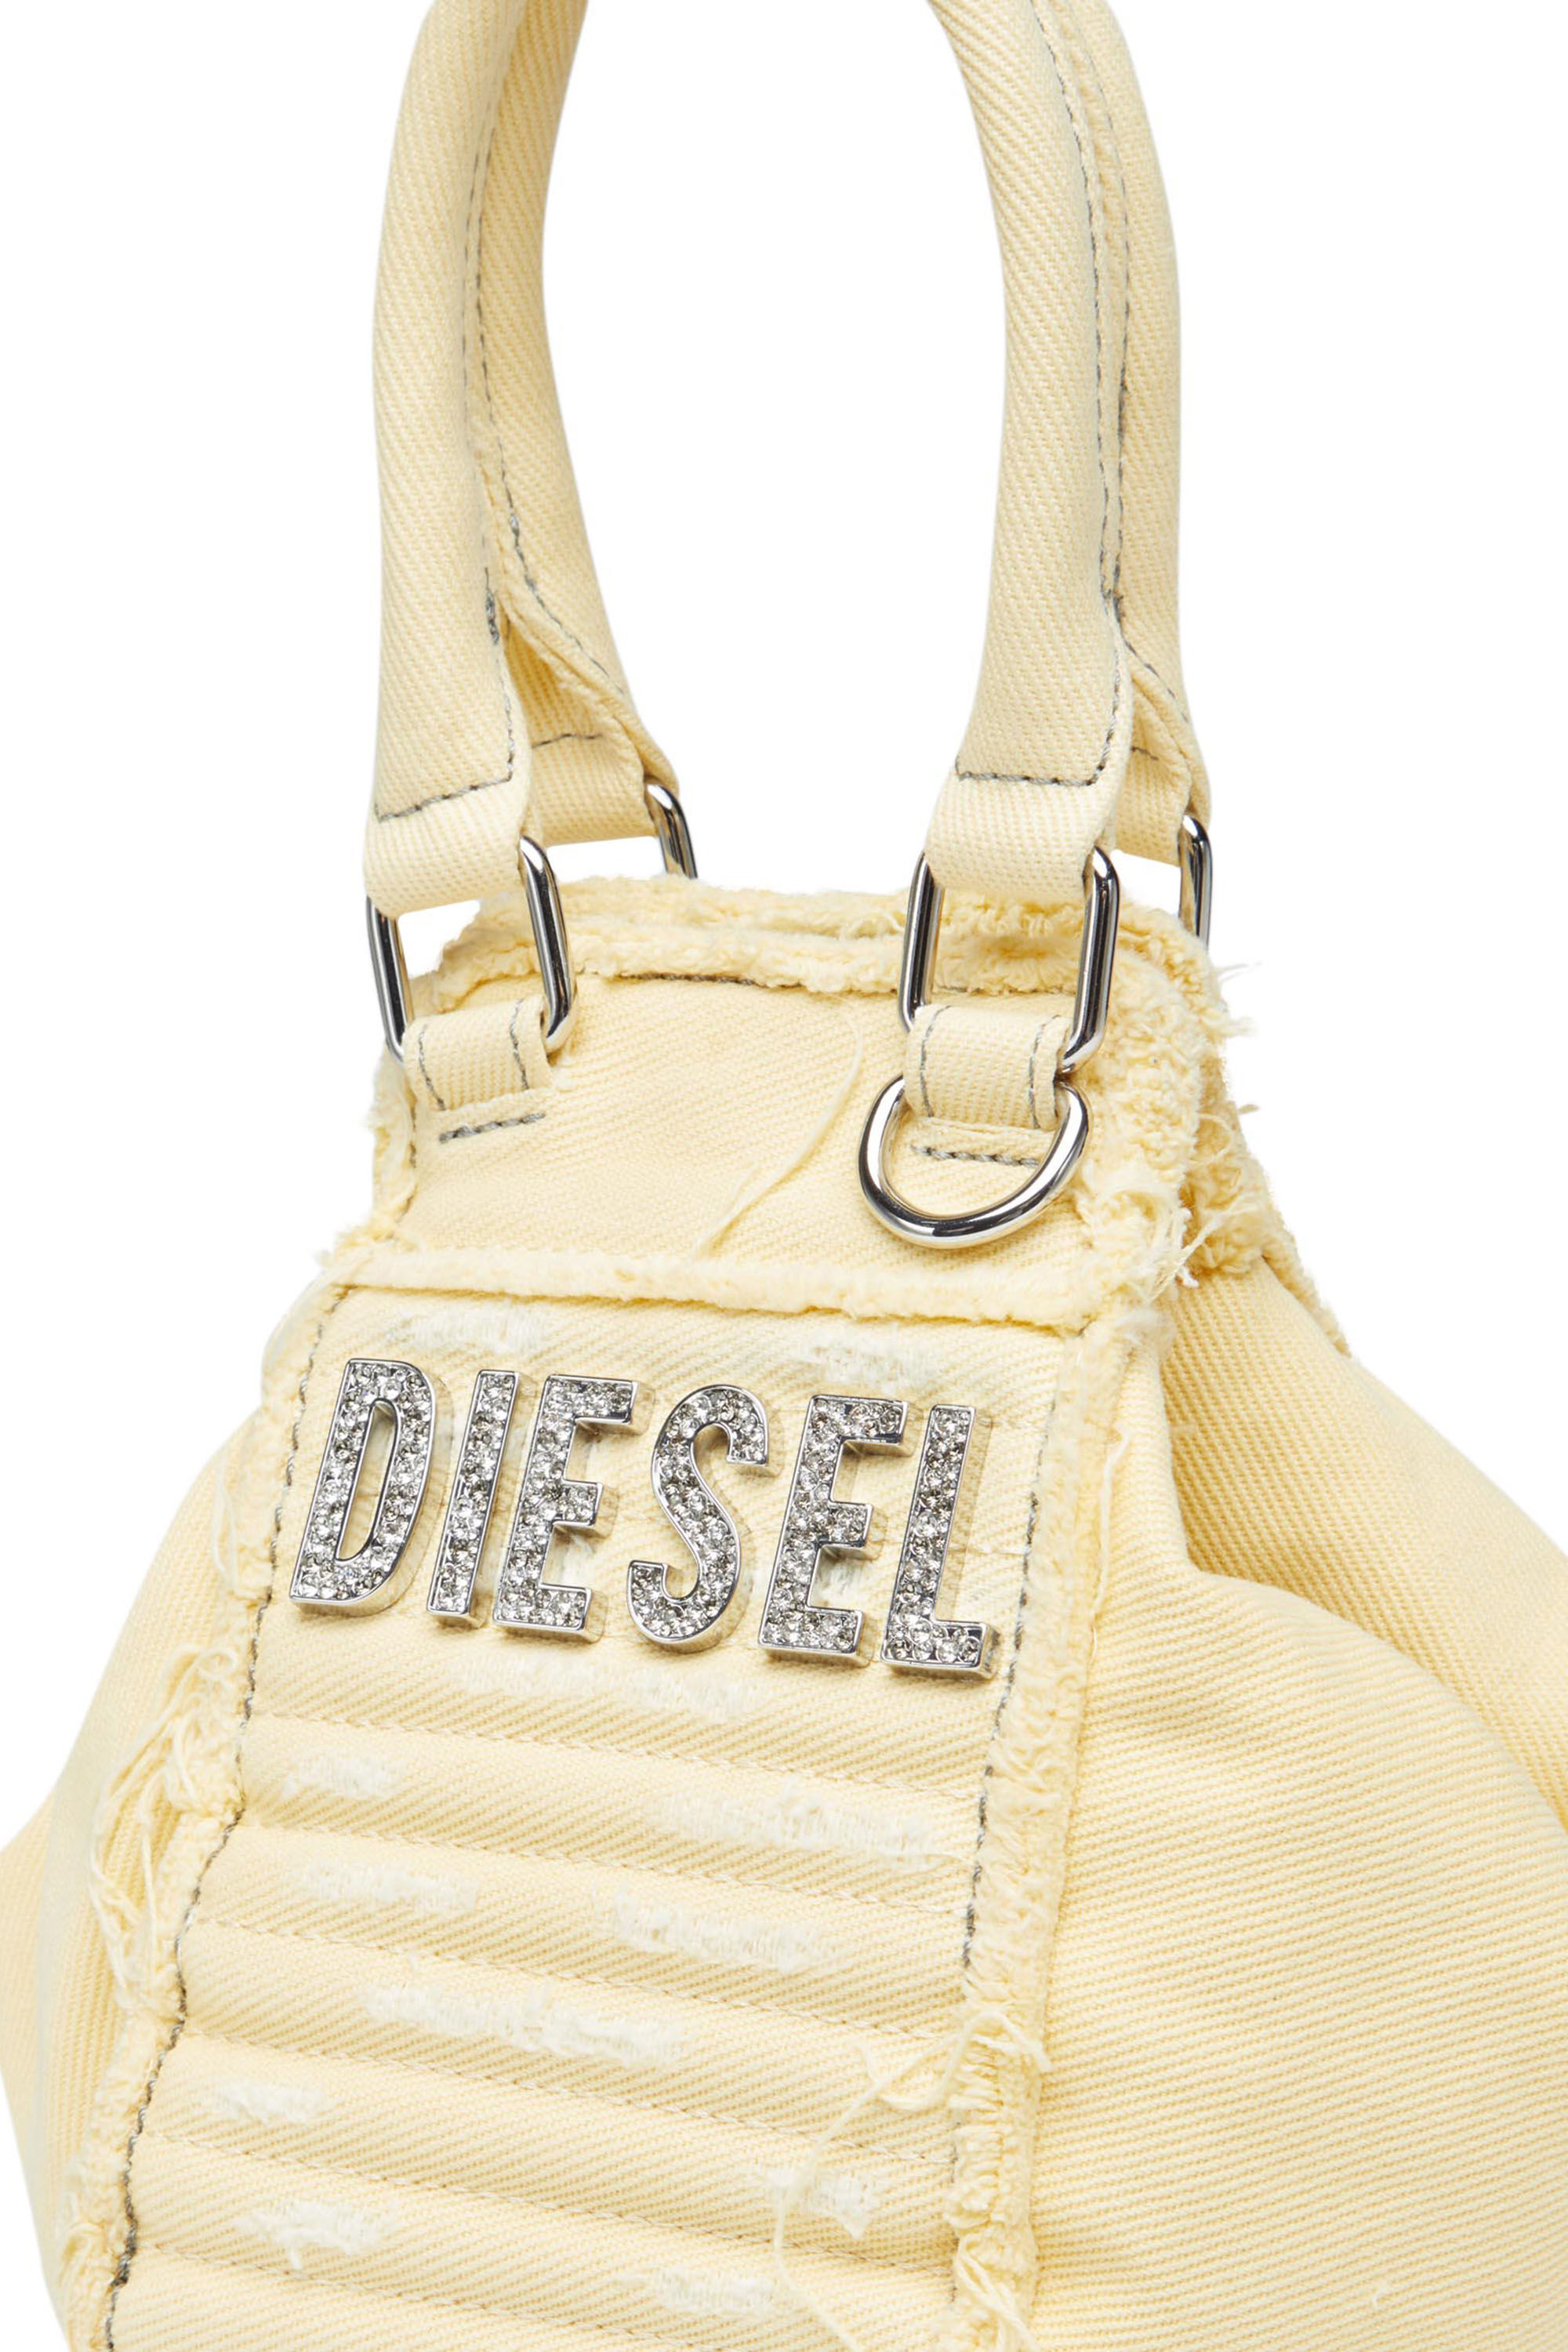 Green 'D-VINA XS' shoulder bag Diesel - Vitkac HK